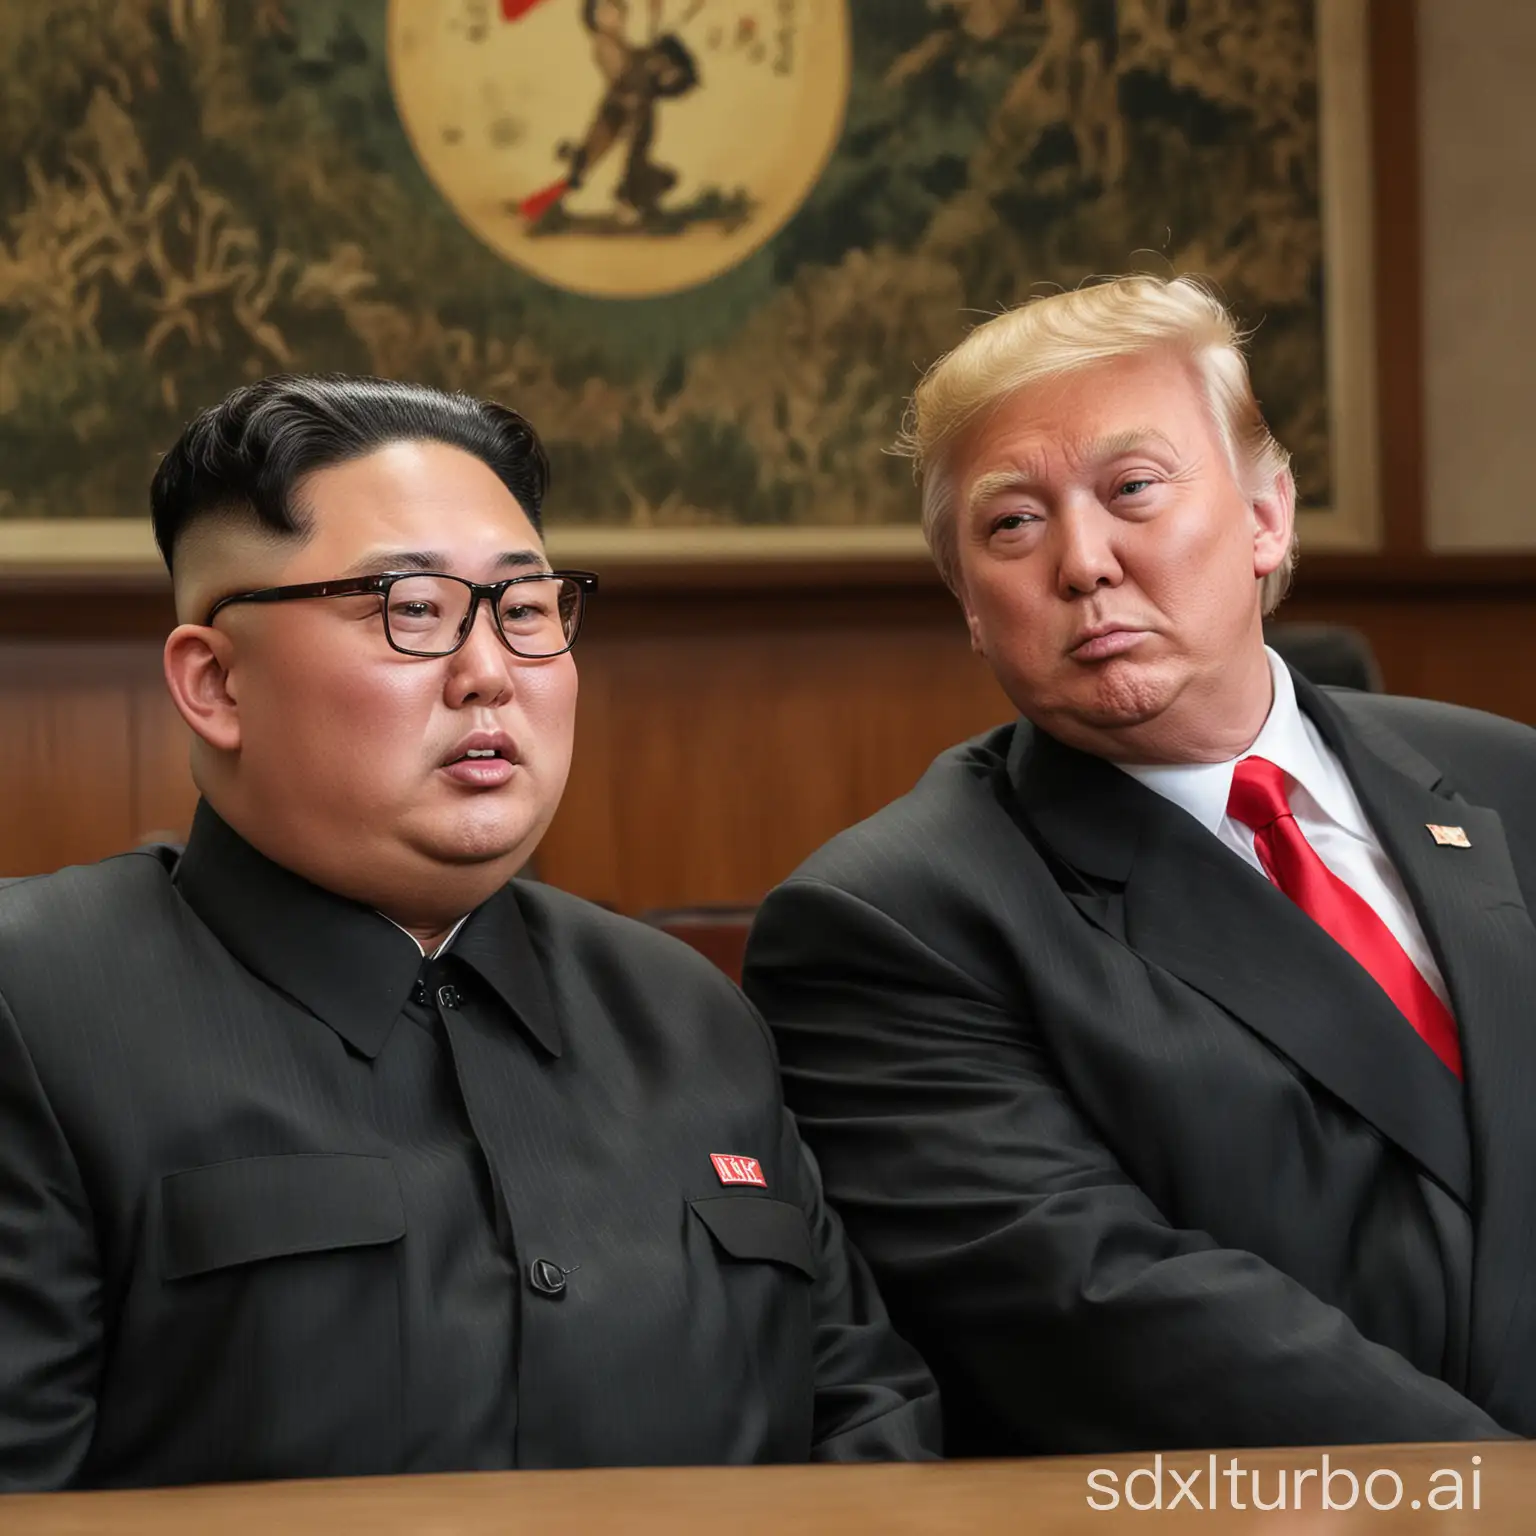 Political-Leaders-Meeting-Donald-Trump-and-Kim-Jong-Un-in-Diplomatic-Encounter